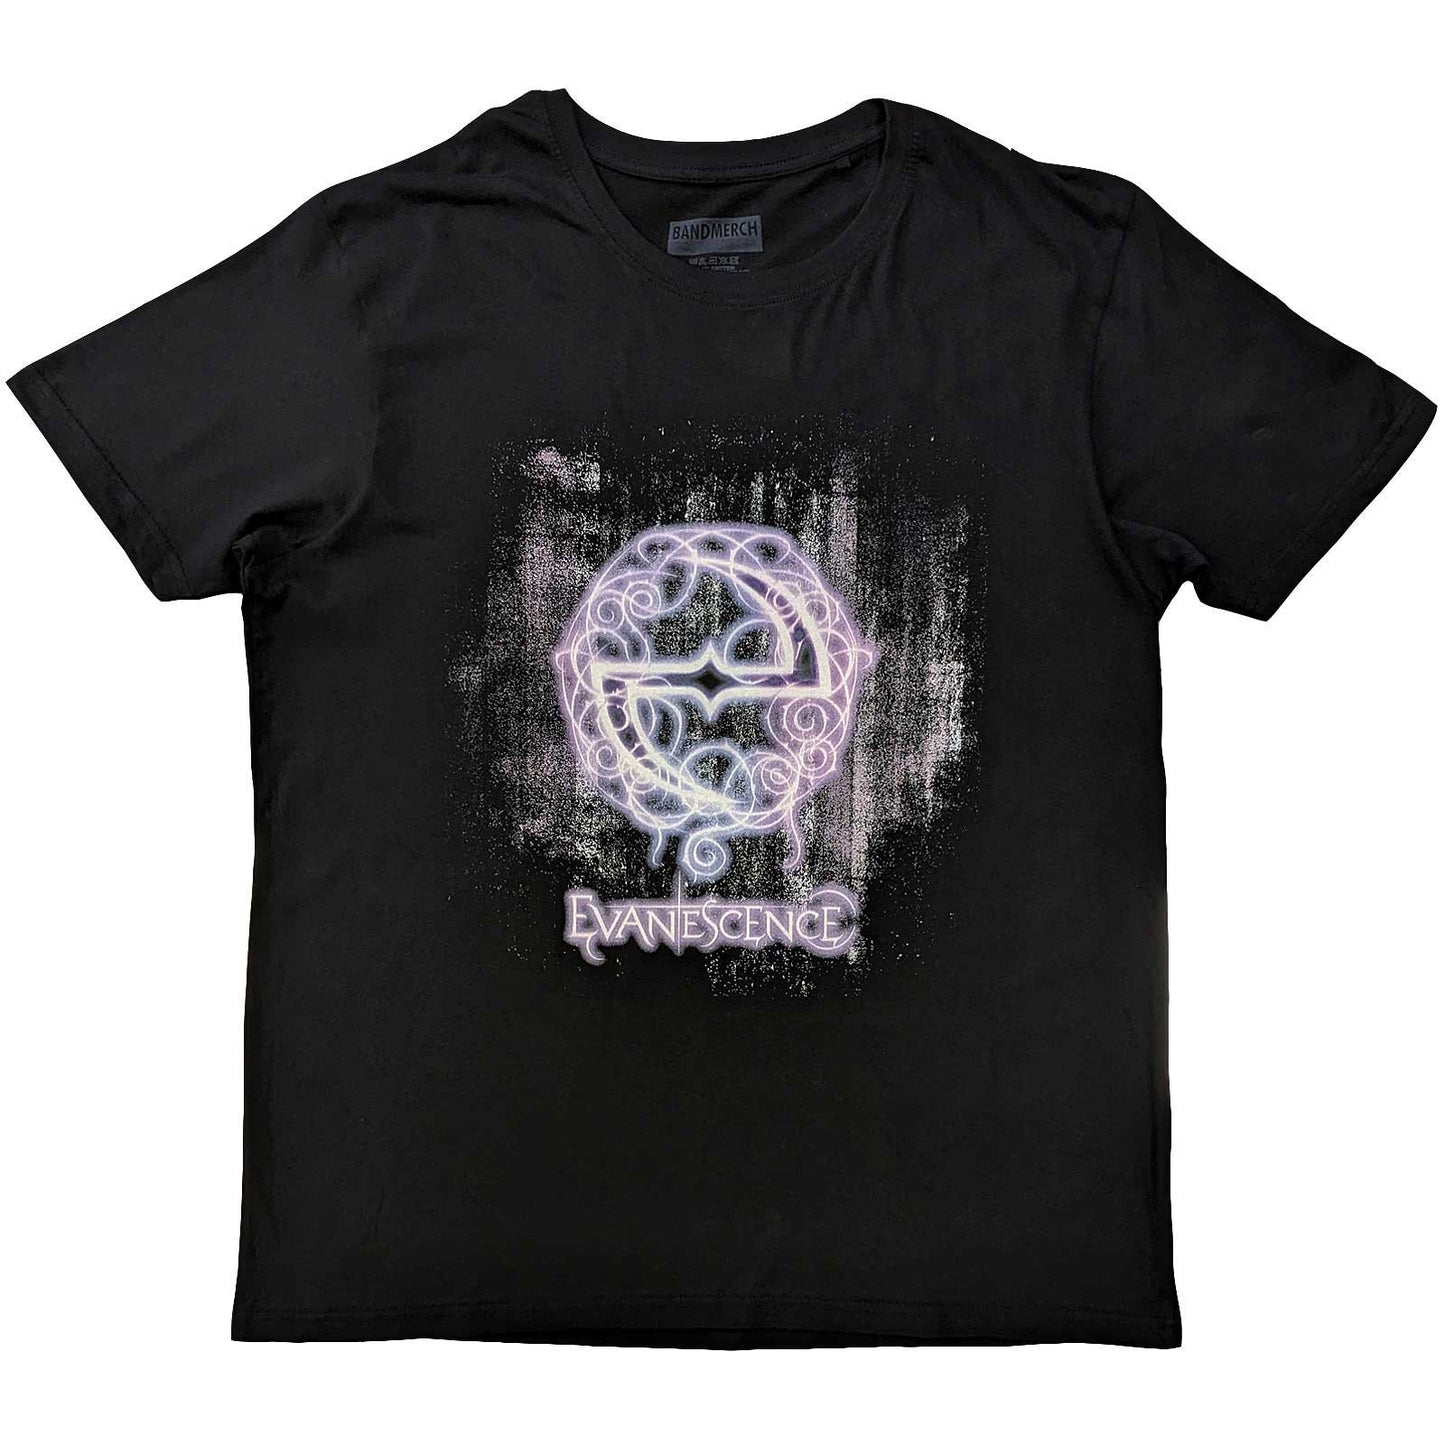 Evanescence T-Shirt: Want